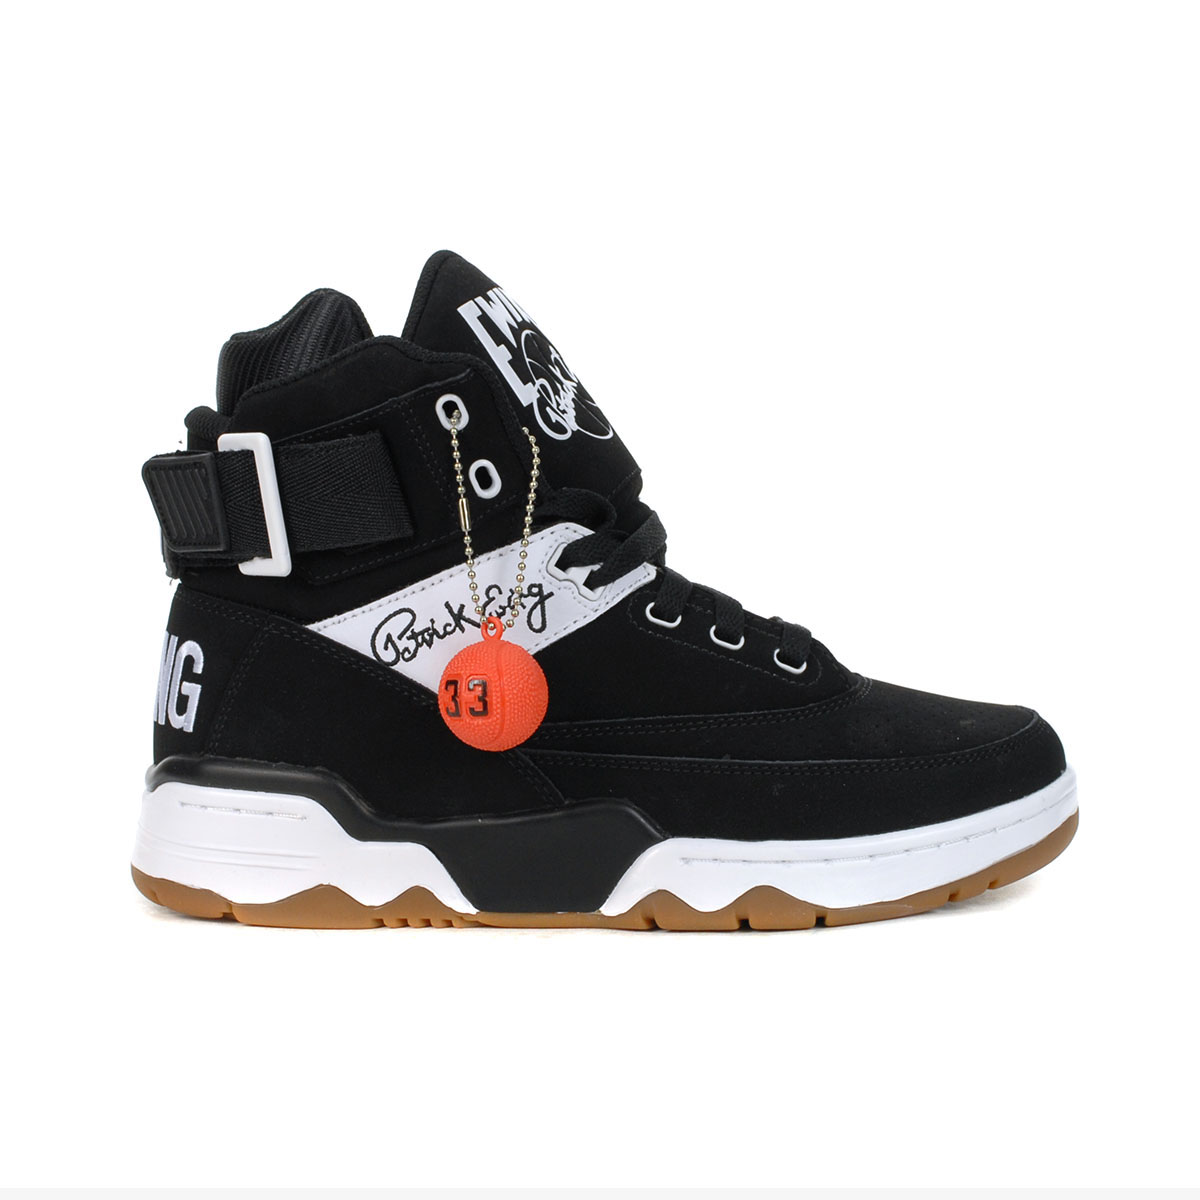 Patrick Ewing 33 HI White/Black/Gum Basketball Shoes - WOOKI.COM